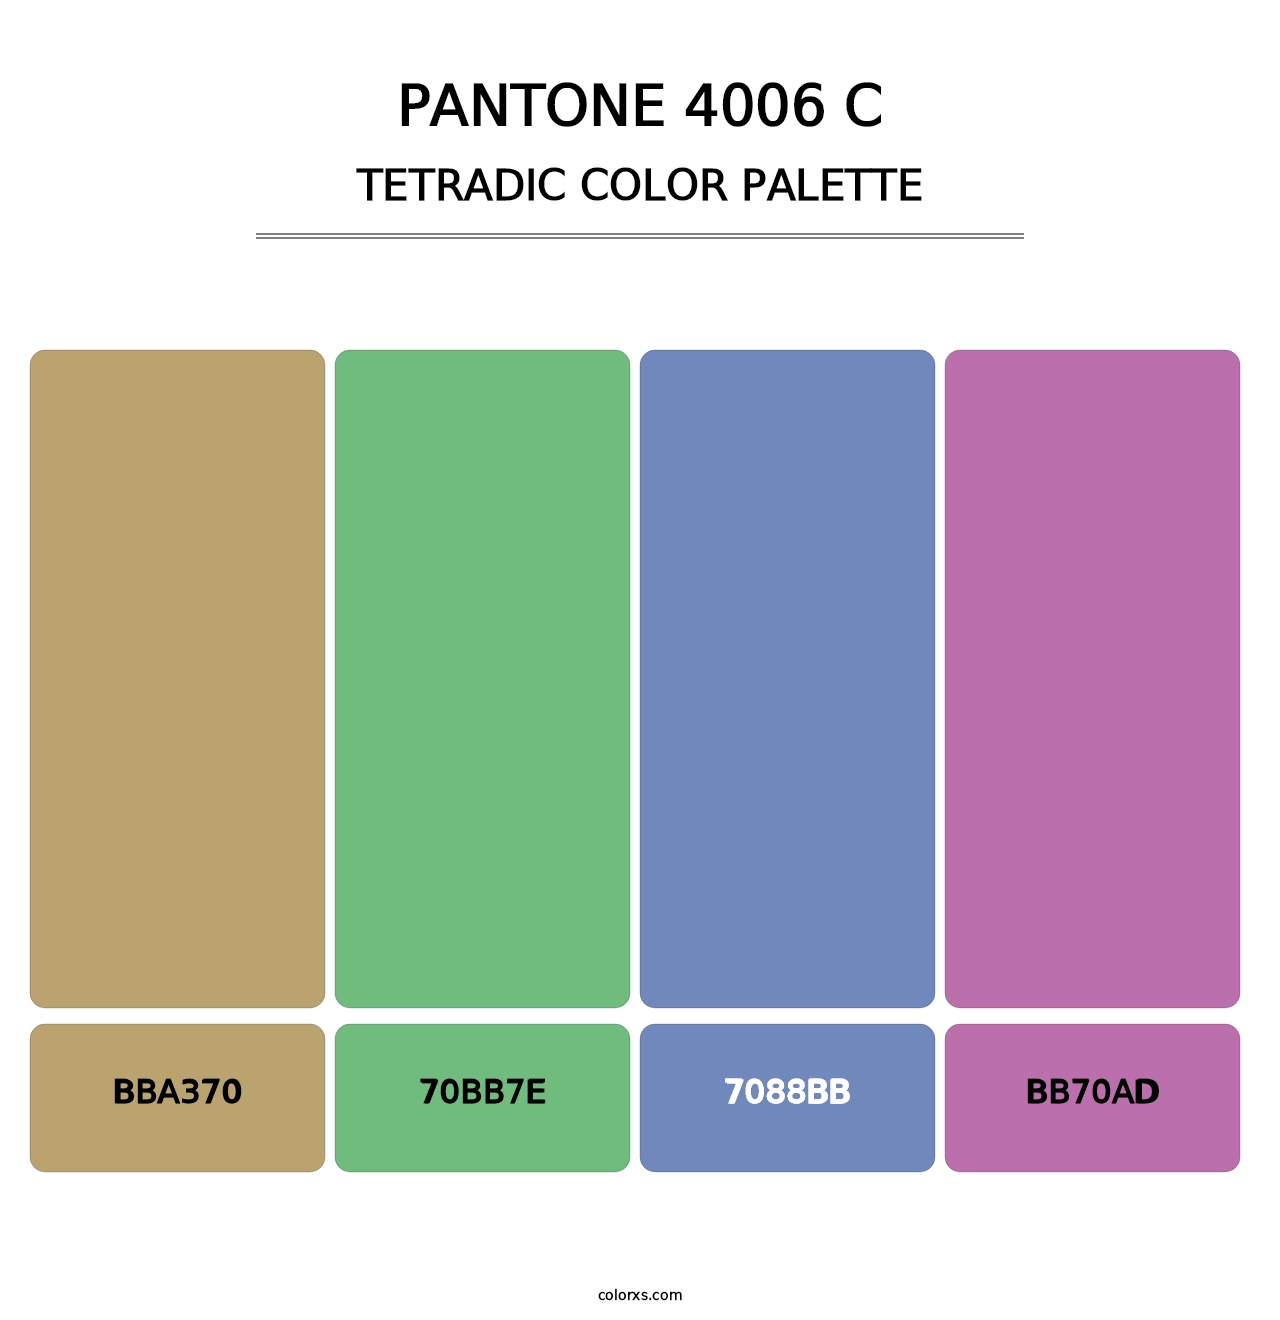 PANTONE 4006 C - Tetradic Color Palette